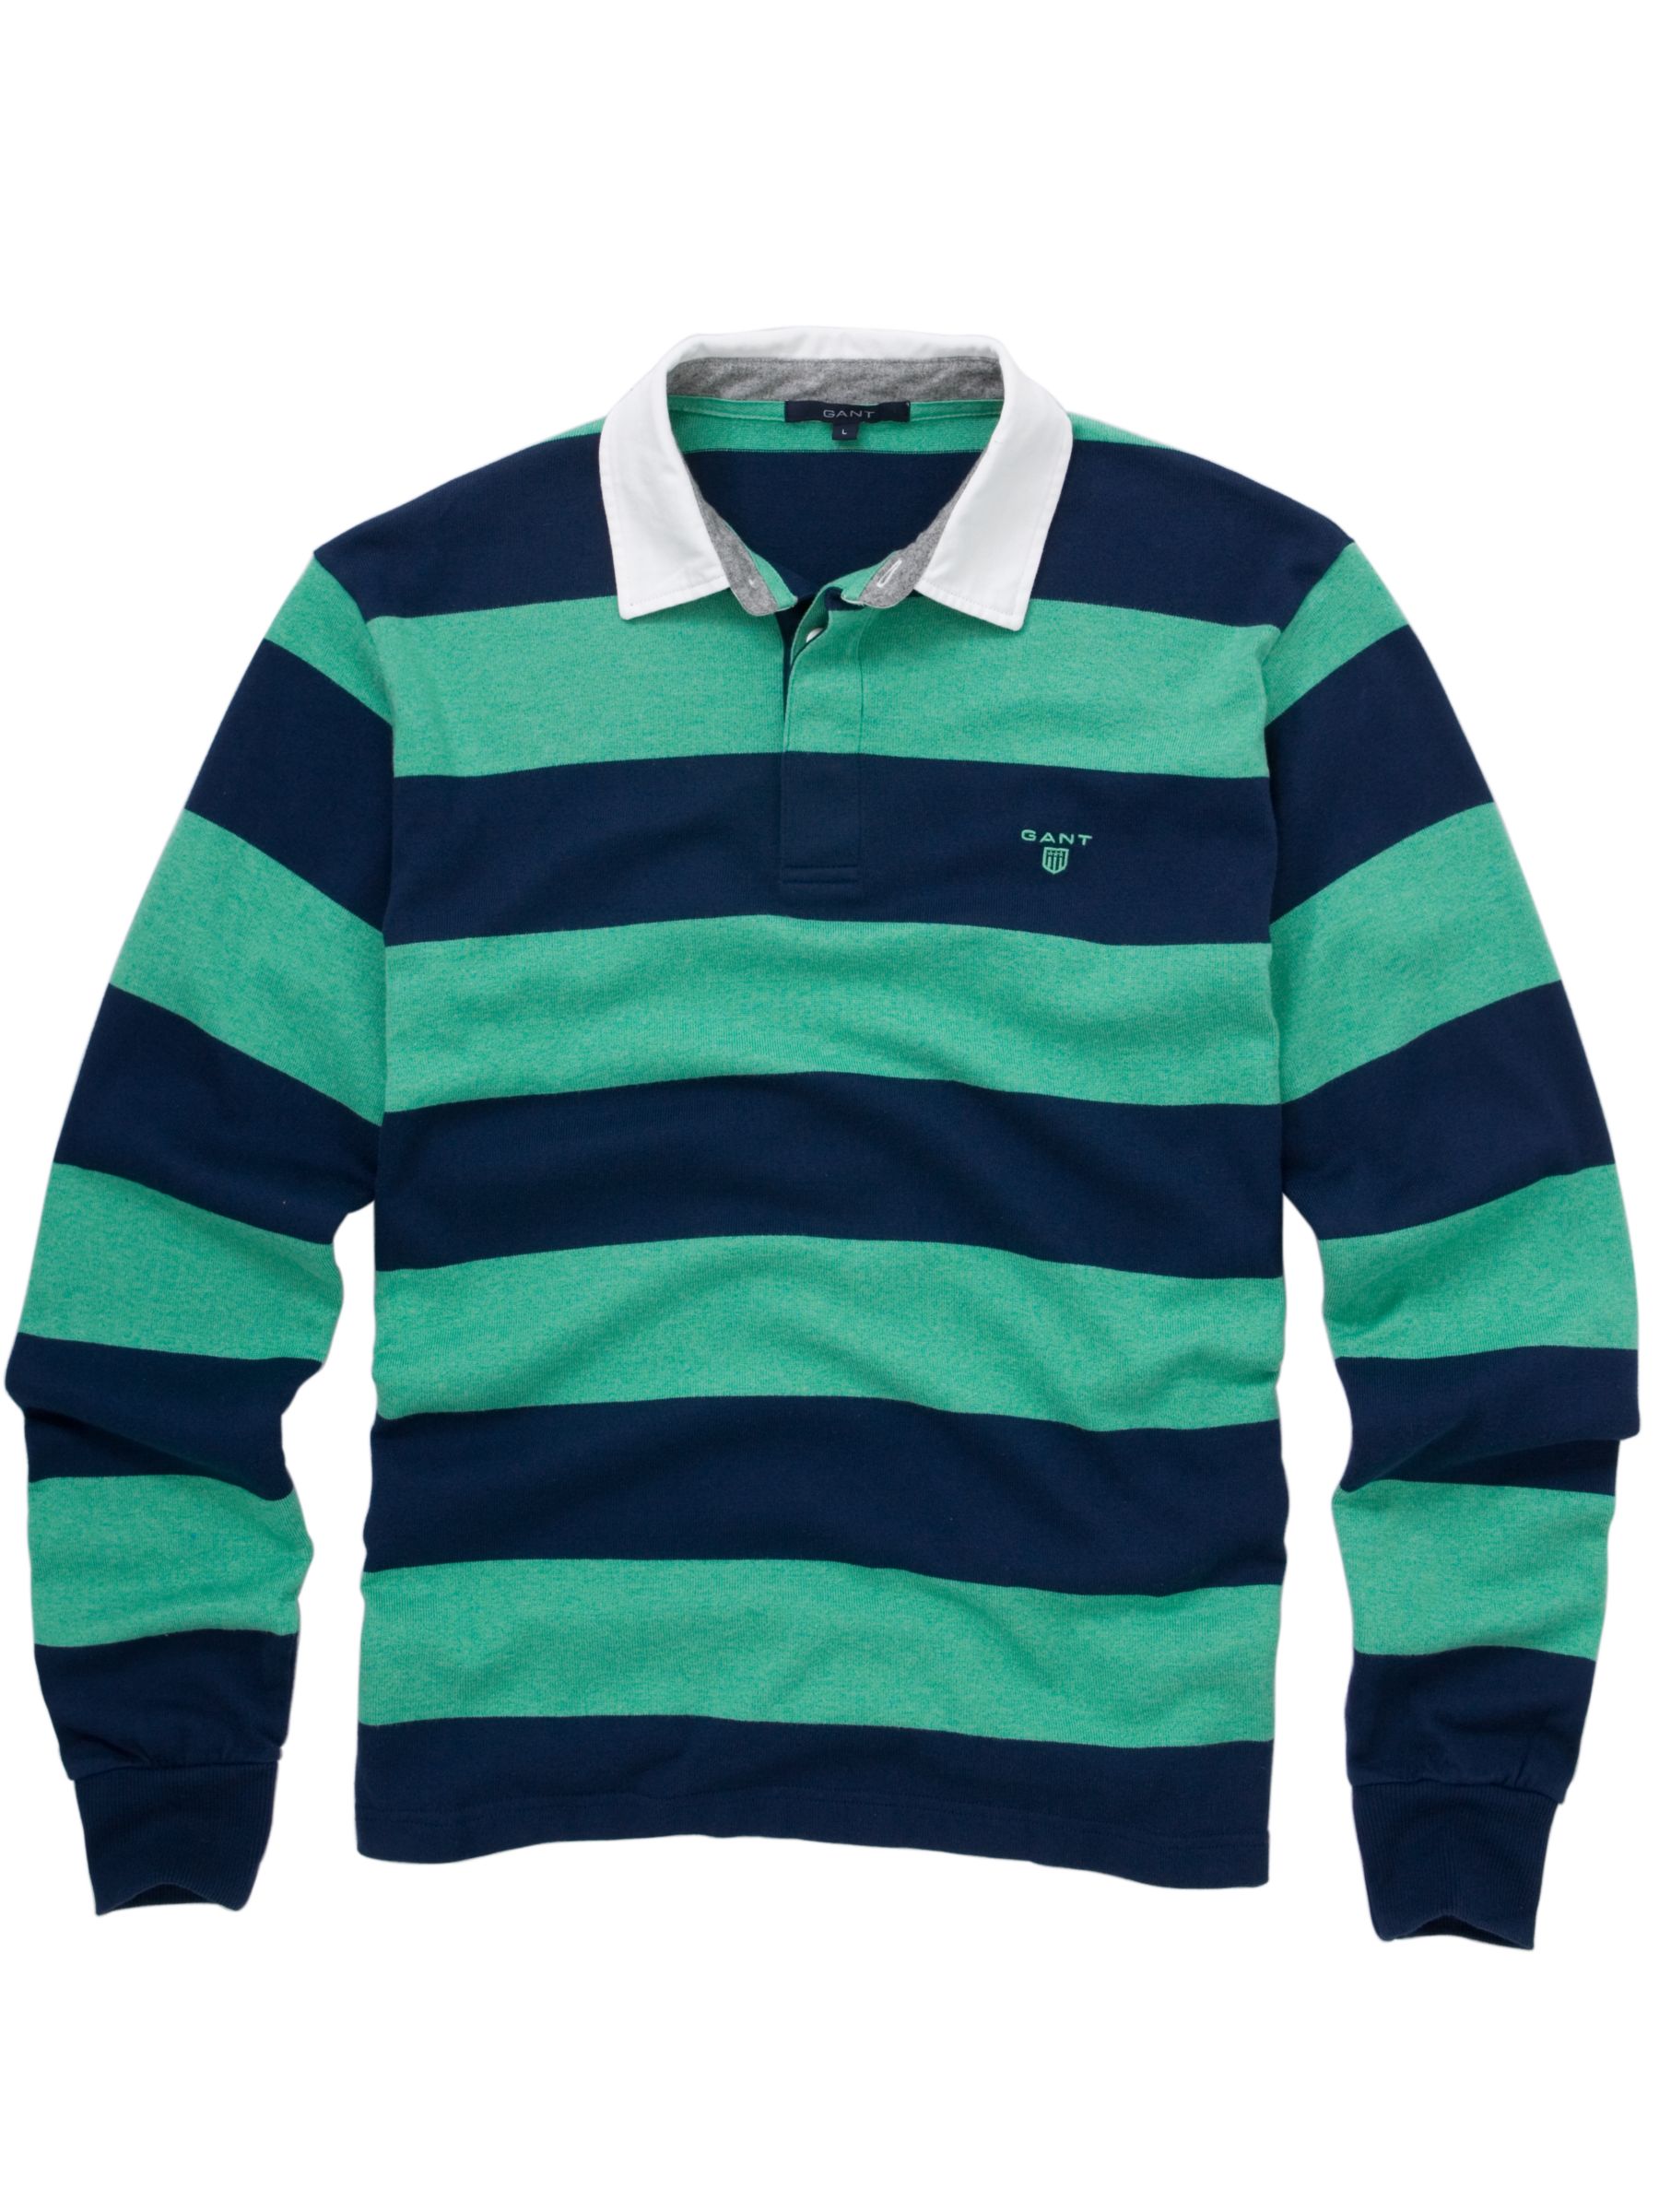 Gant Classic Barstripe Rugby Shirt, Green/Navy